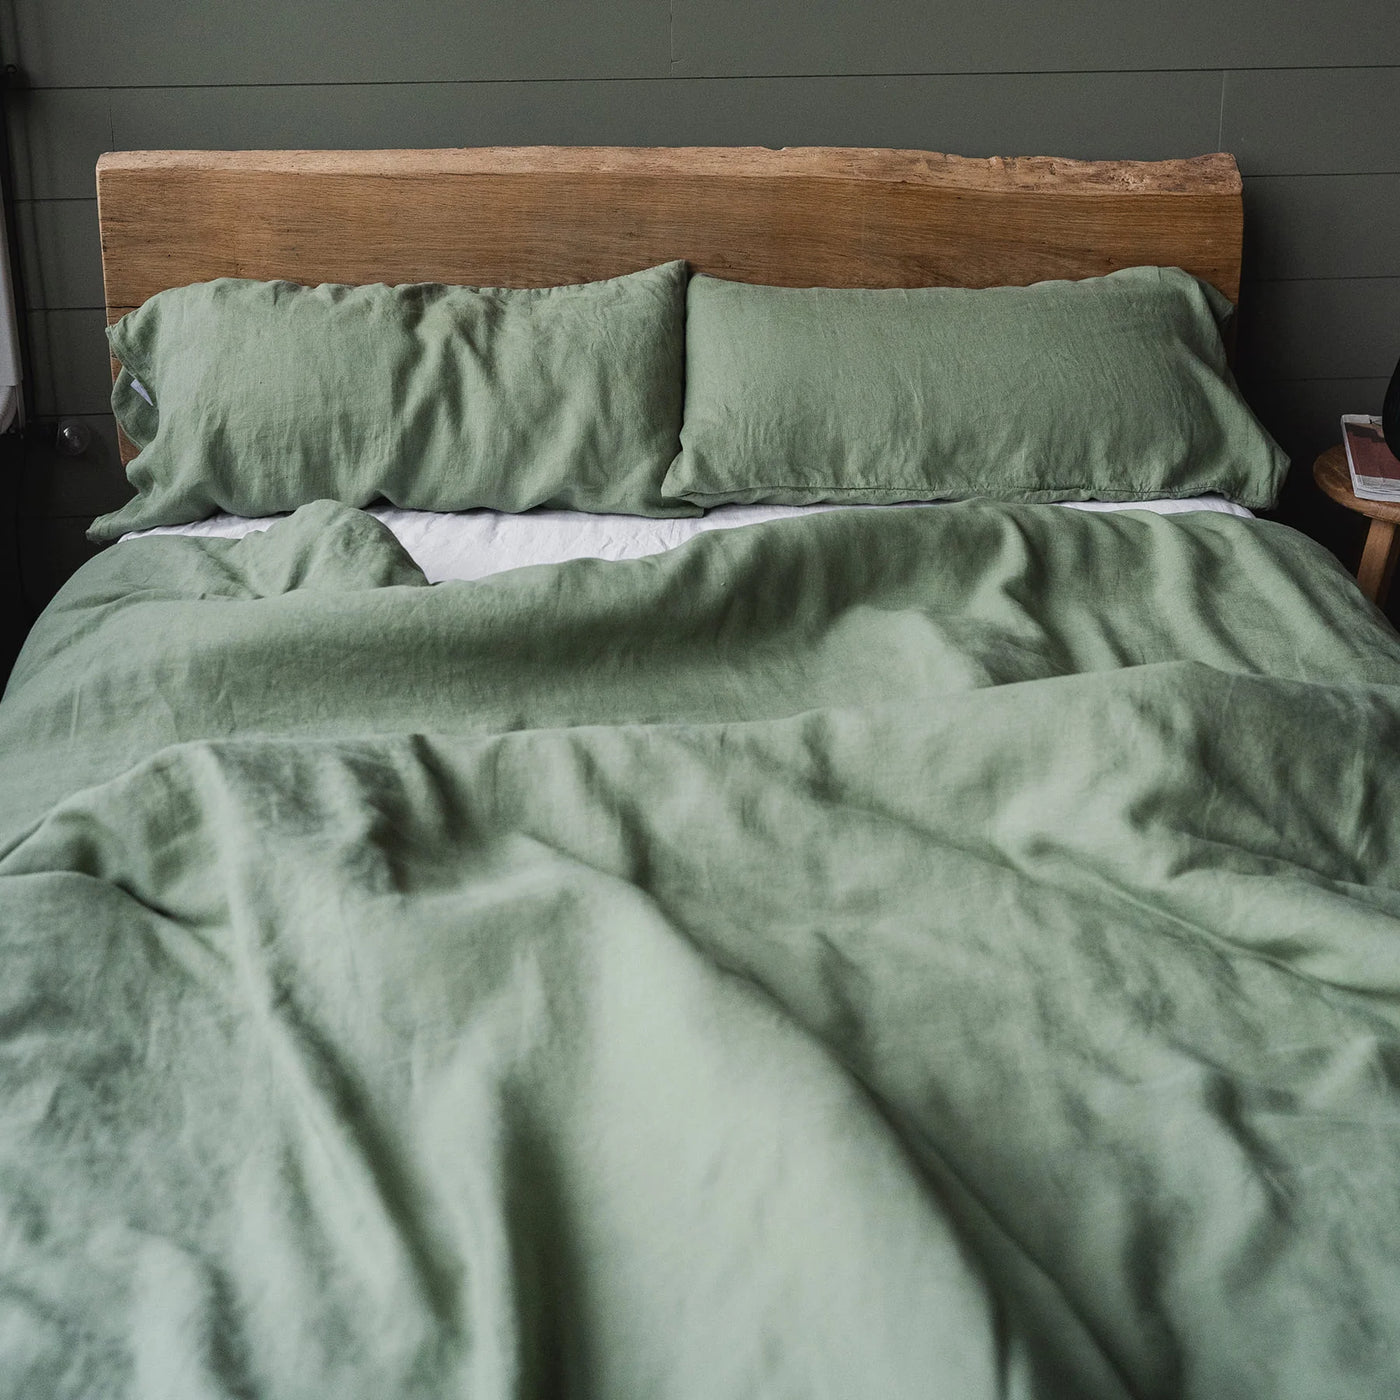 Linen bedding set 150x200 in Olive